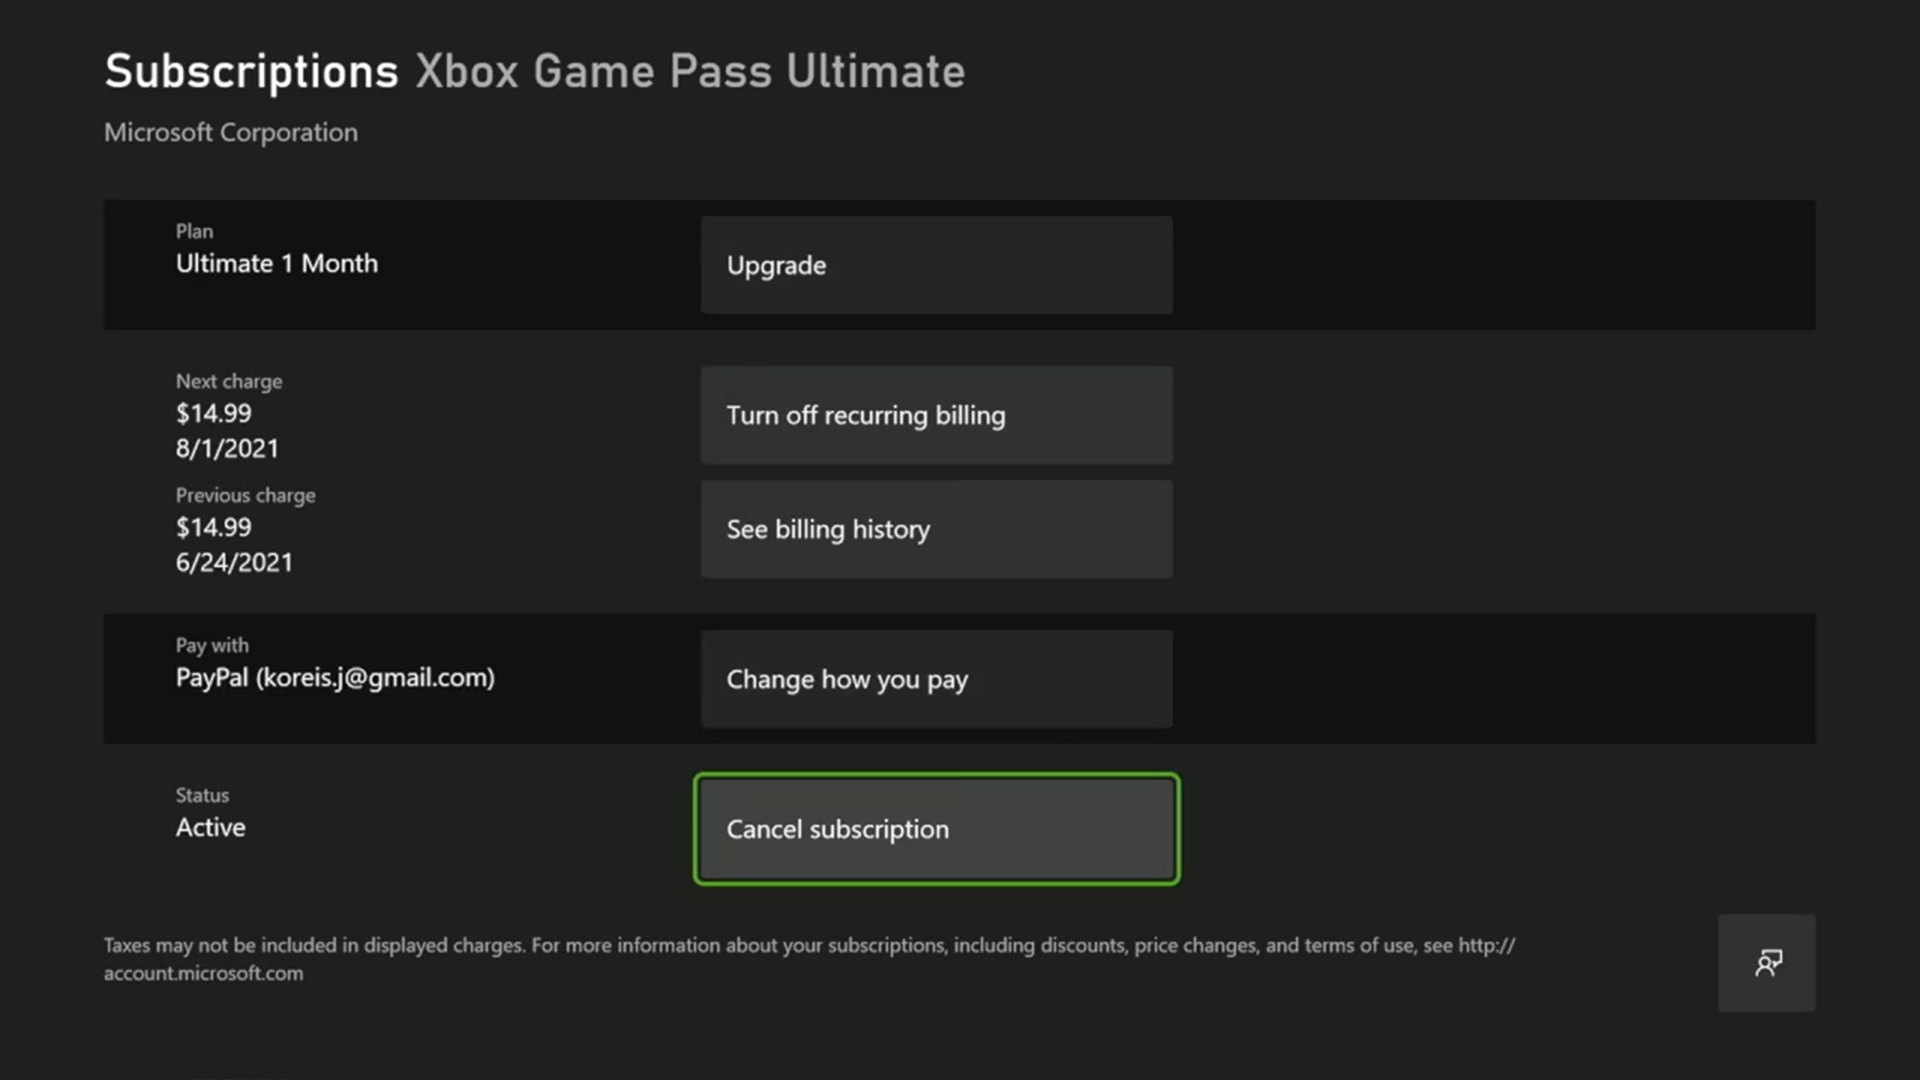 Cancel subscription option in Xbox menu